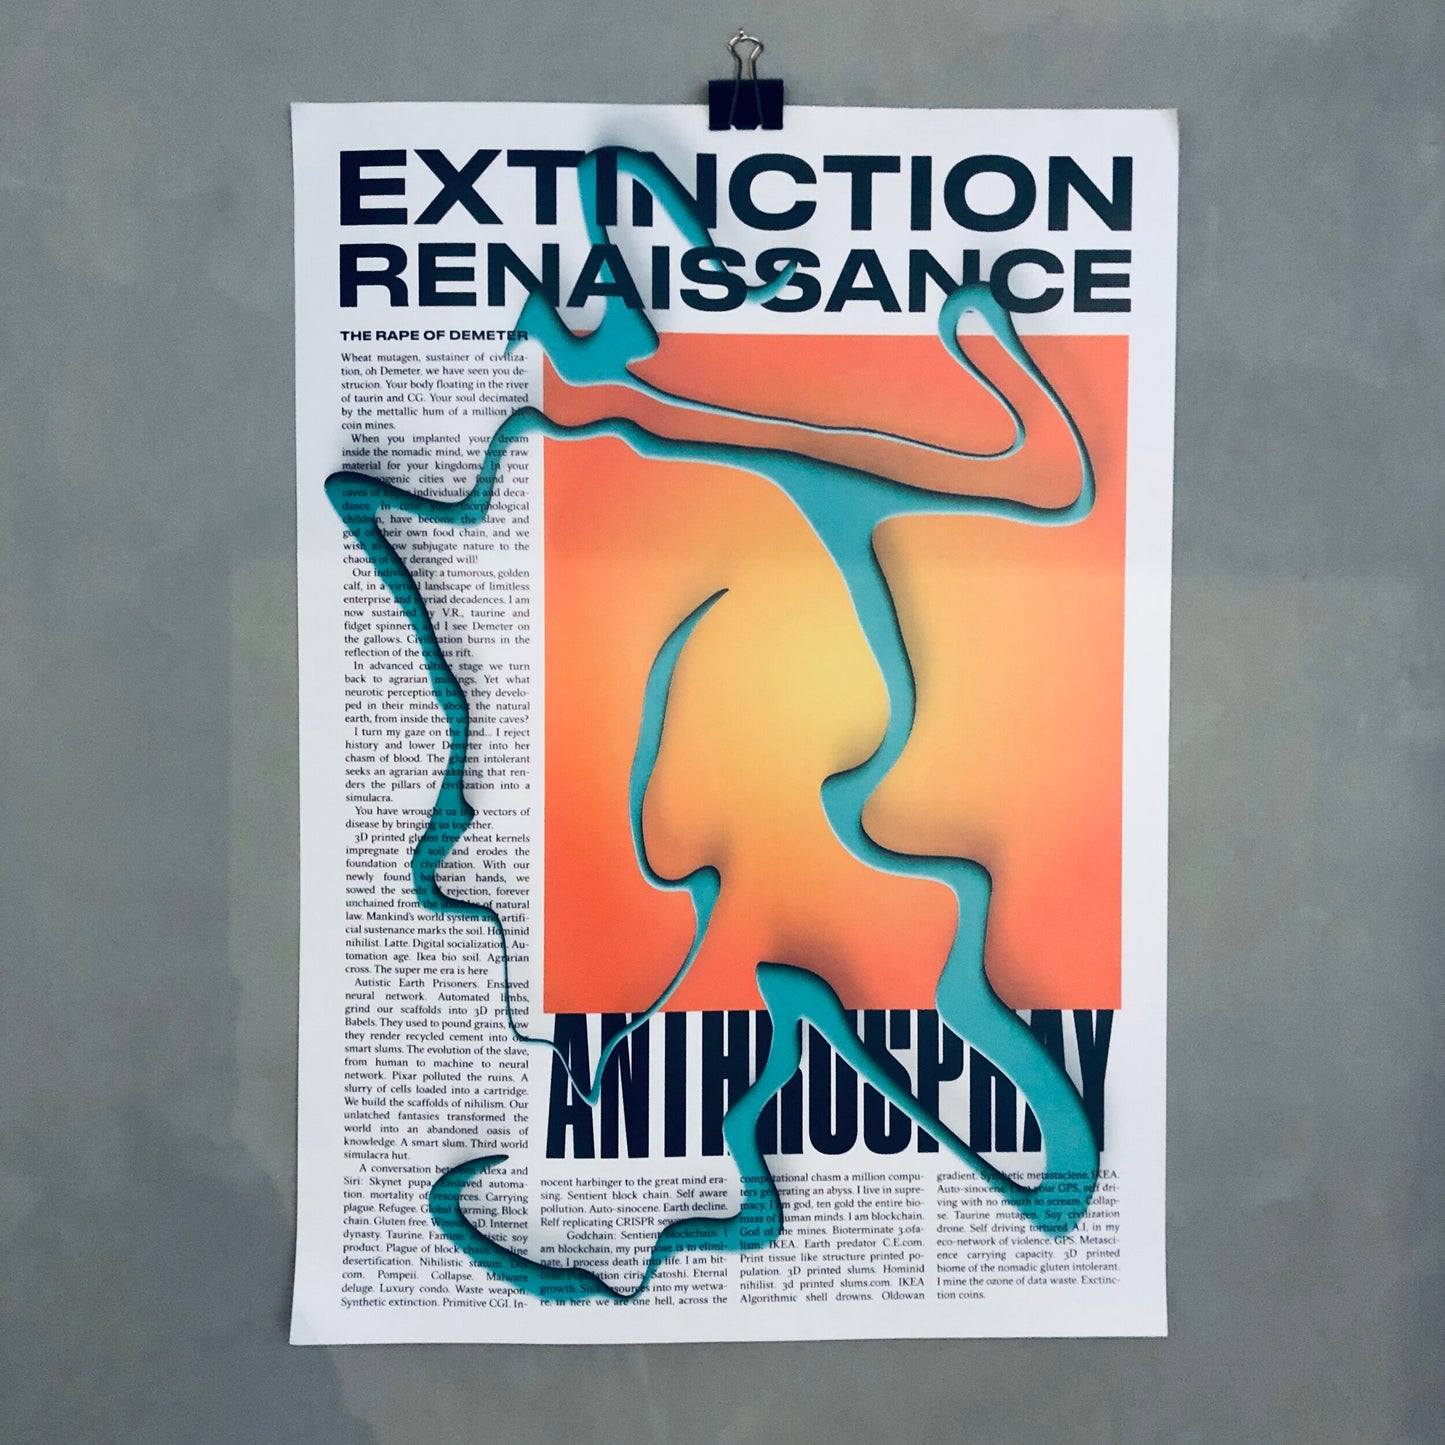 Extinction Renaissance by Tobias Kingstedt